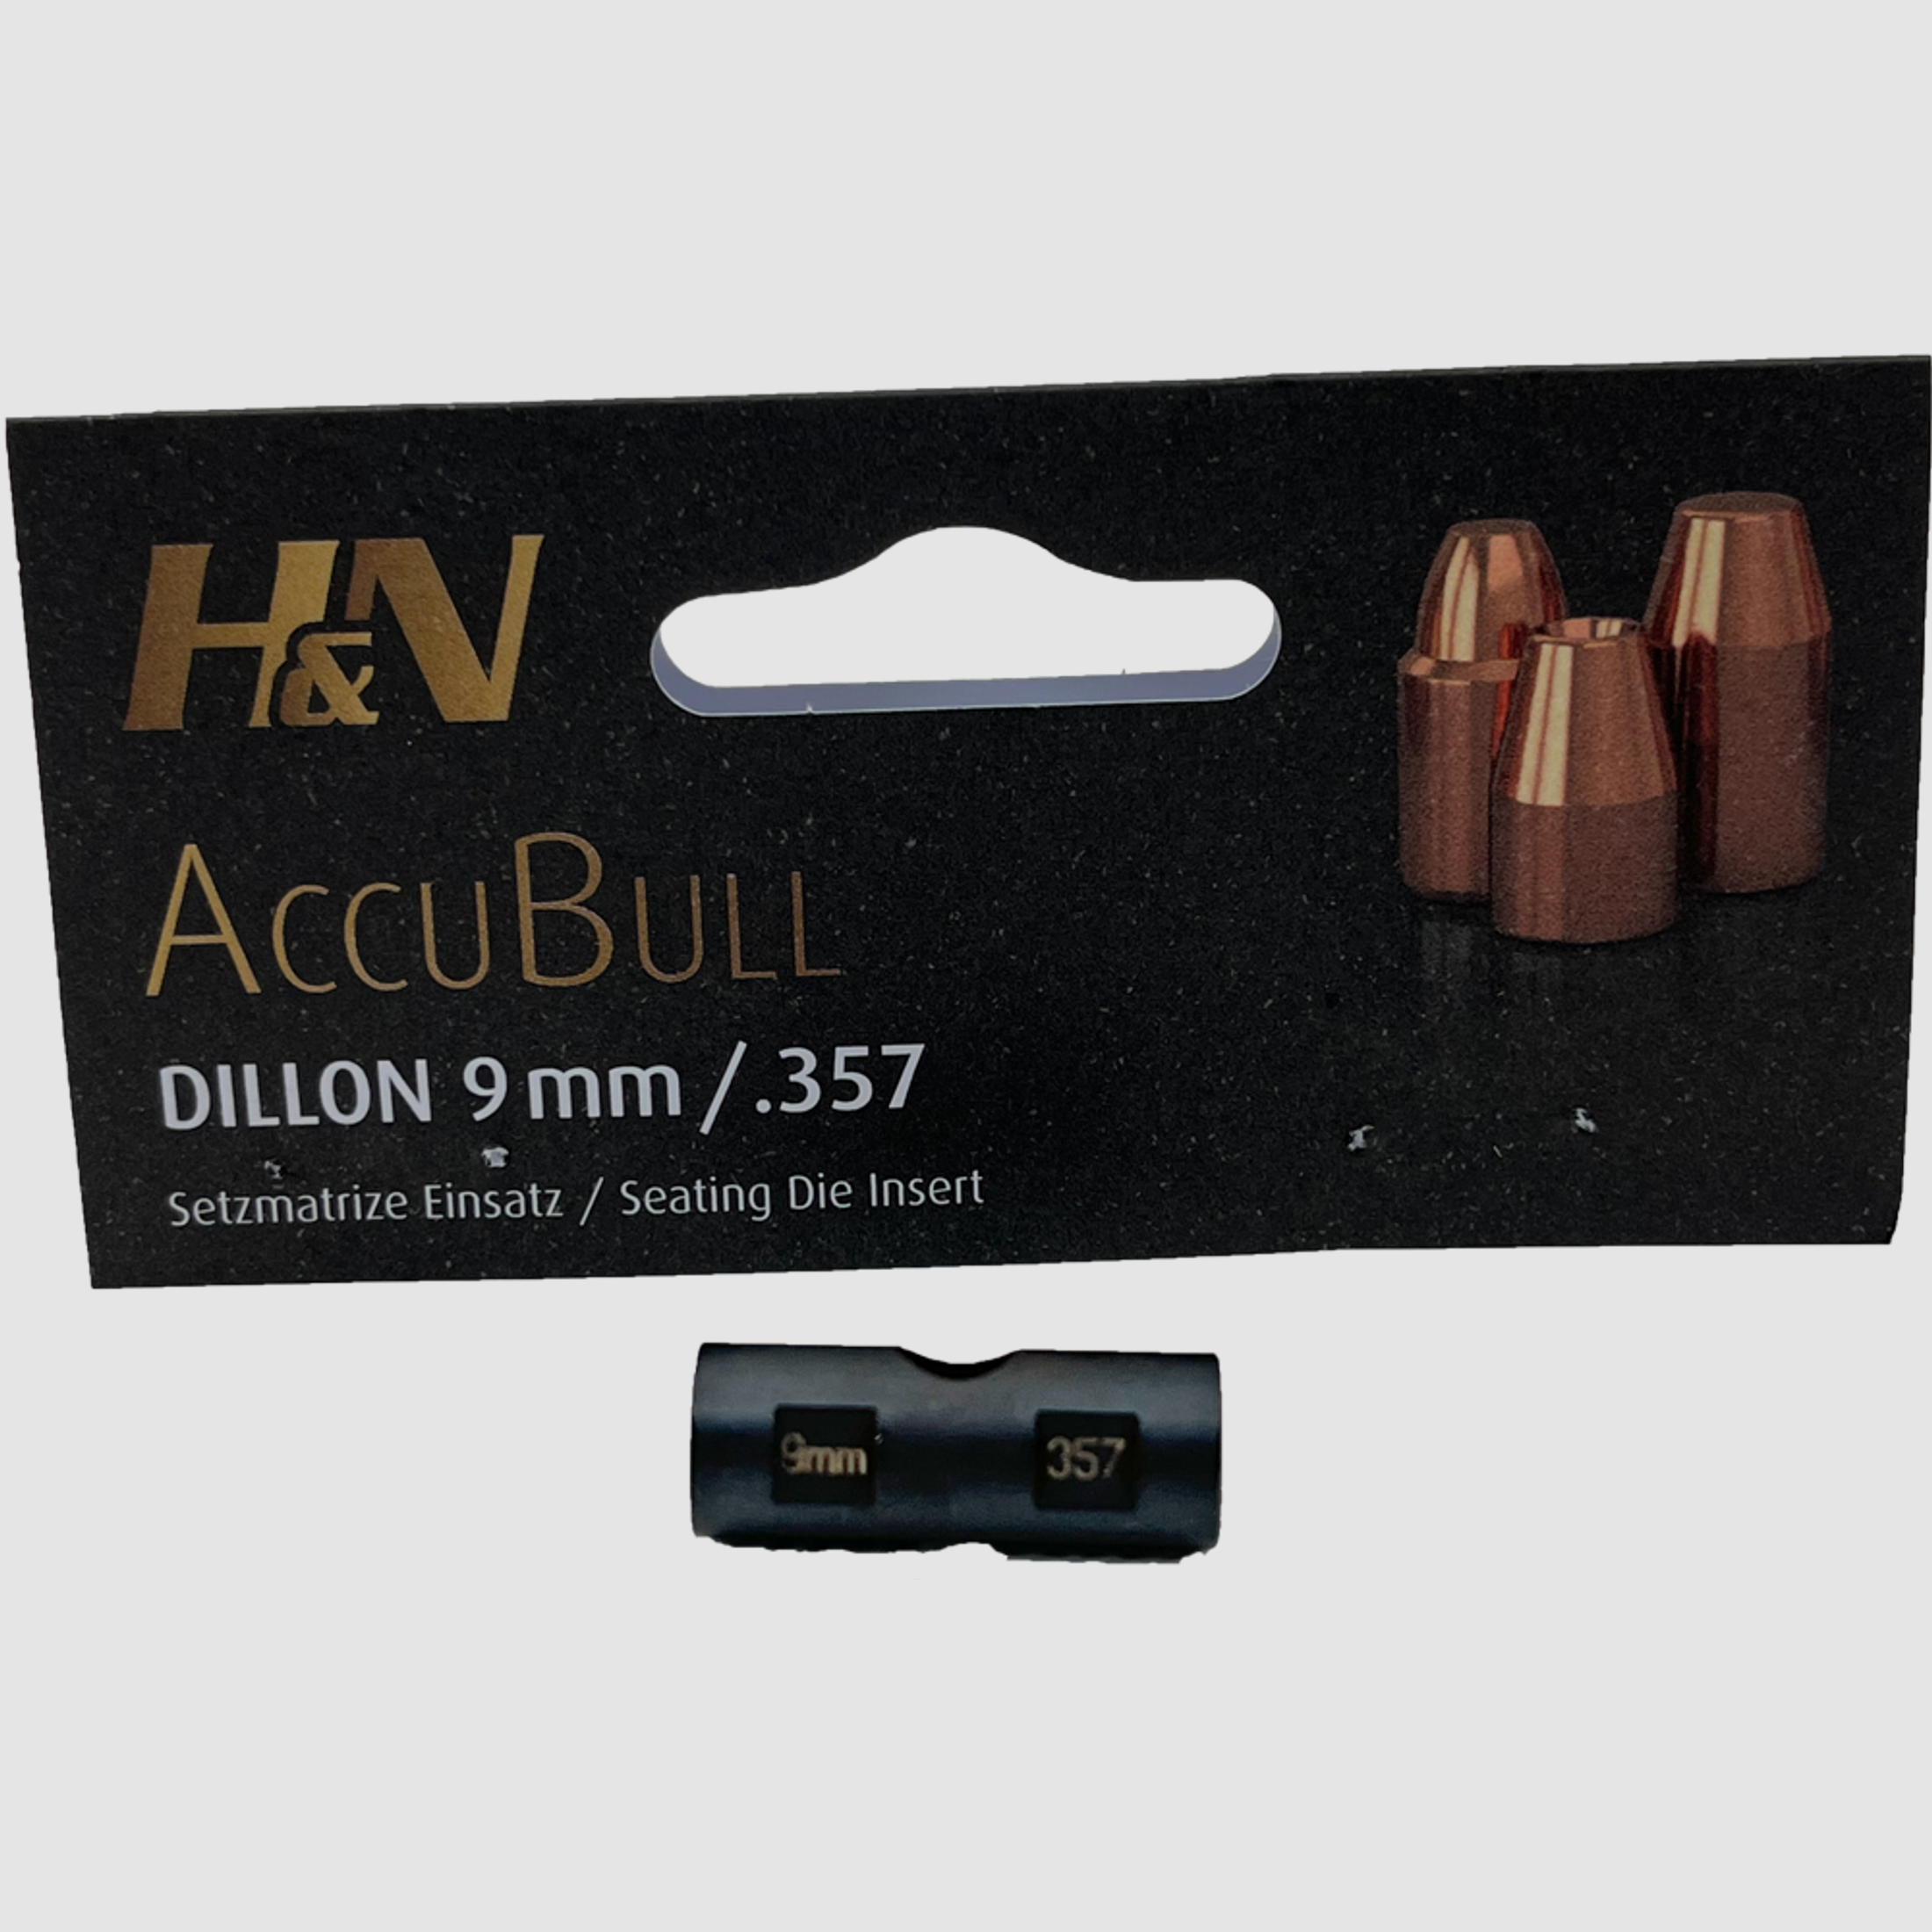 H&N AccuBull Setzstempel 9mm/.357 für Dillon